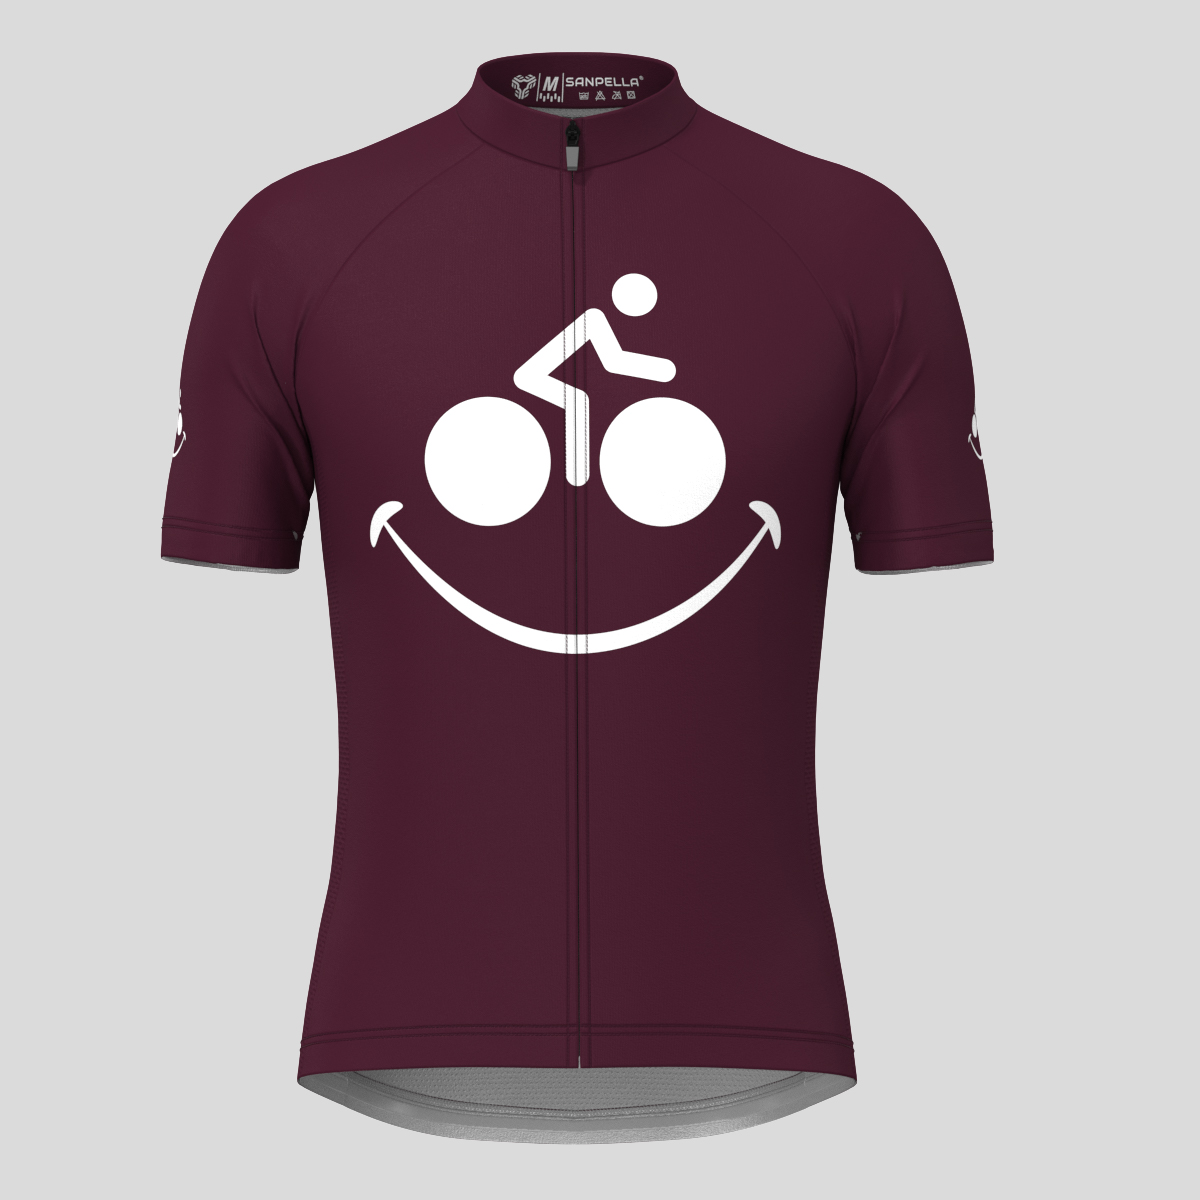 Bike Smile Men's Cycling Jersey - Burgundy